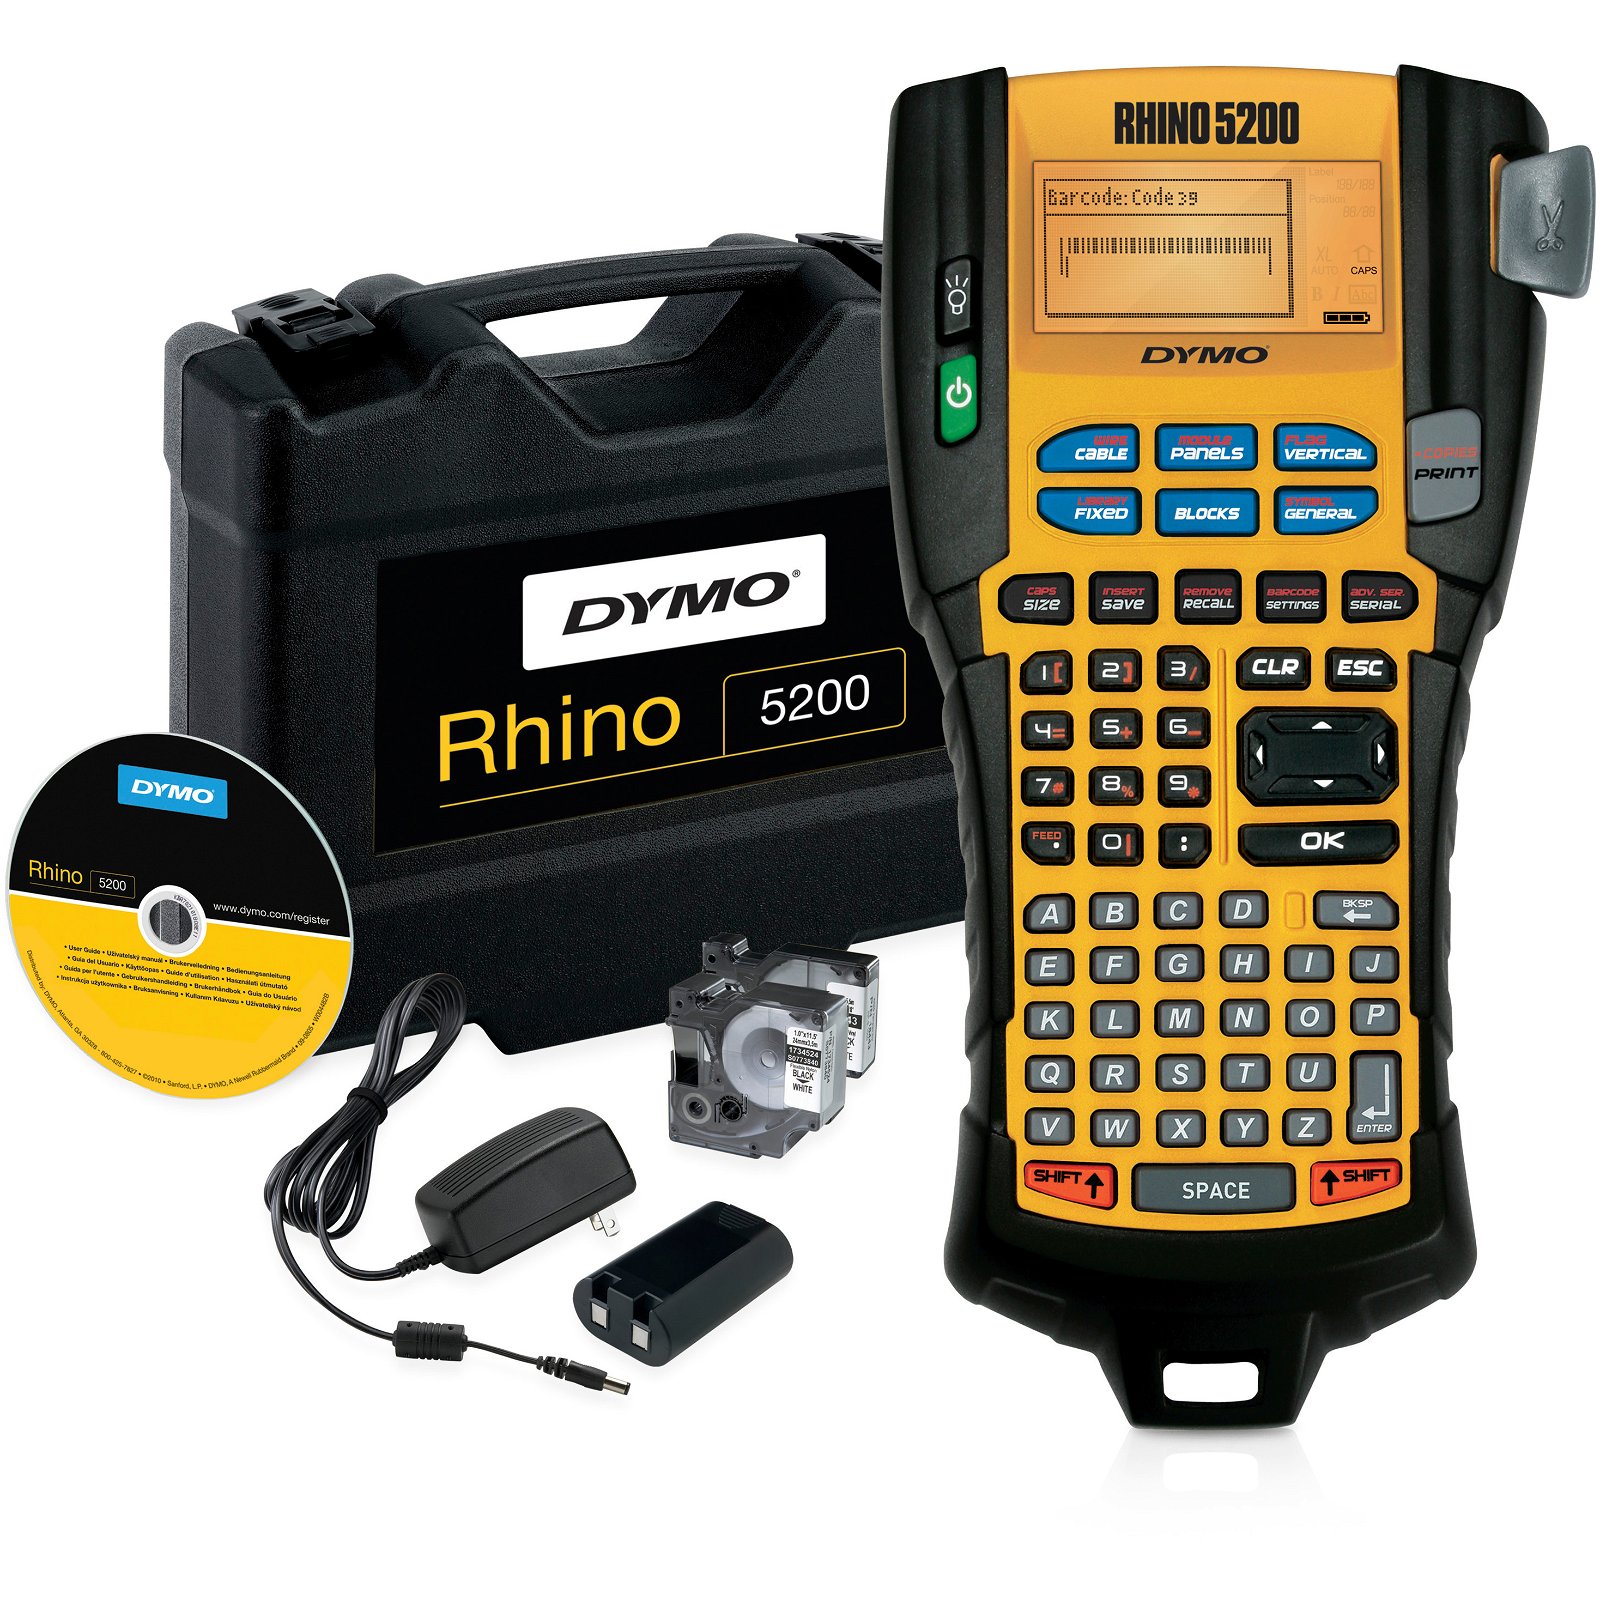 Dymo Rhino 5200 labelprinter kit case